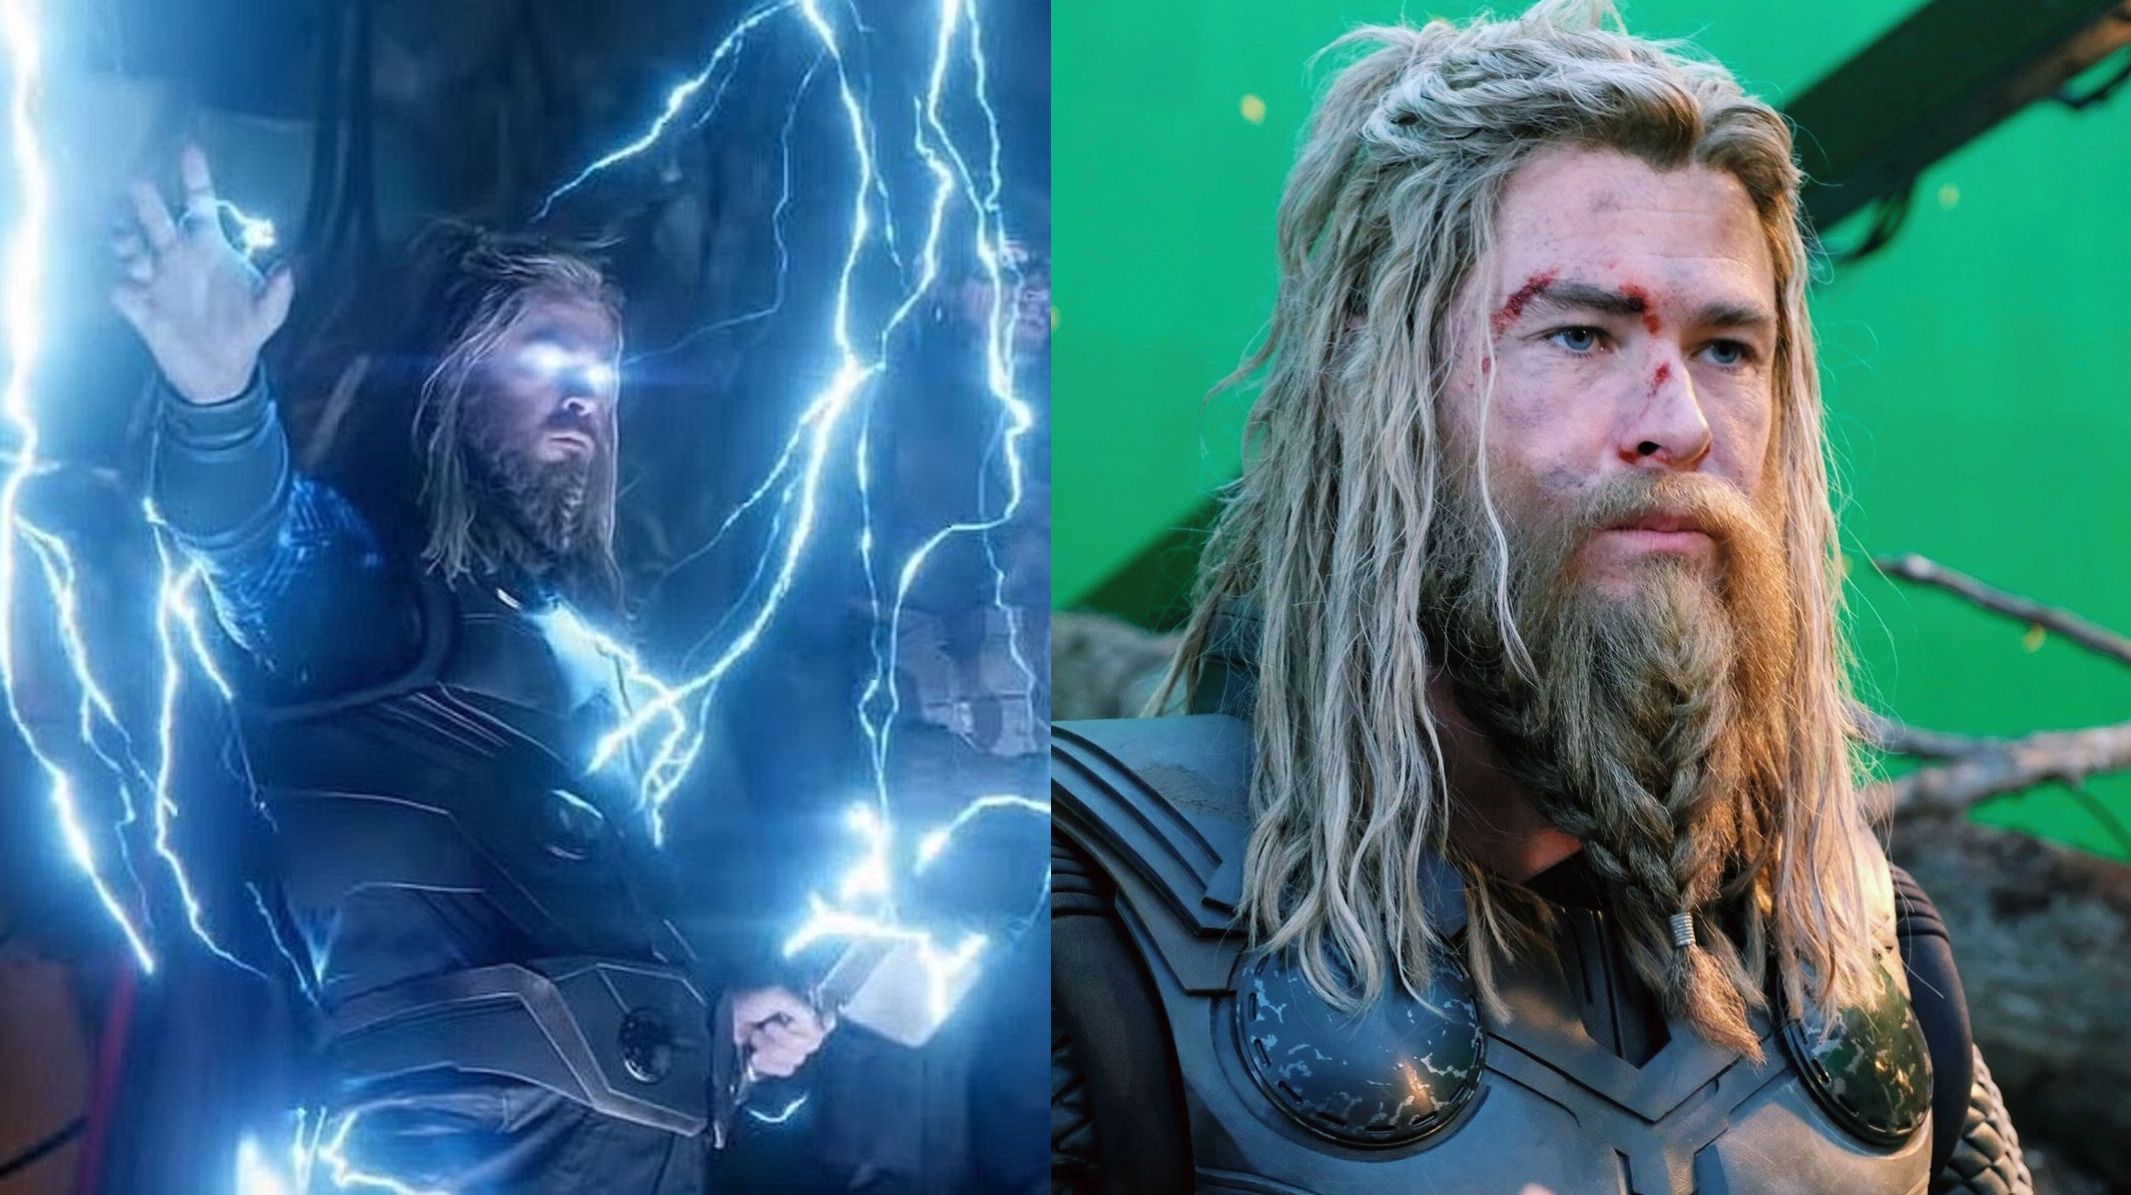 Chris Hemsworth aka Thor in Avengers: Endgame looking like a true